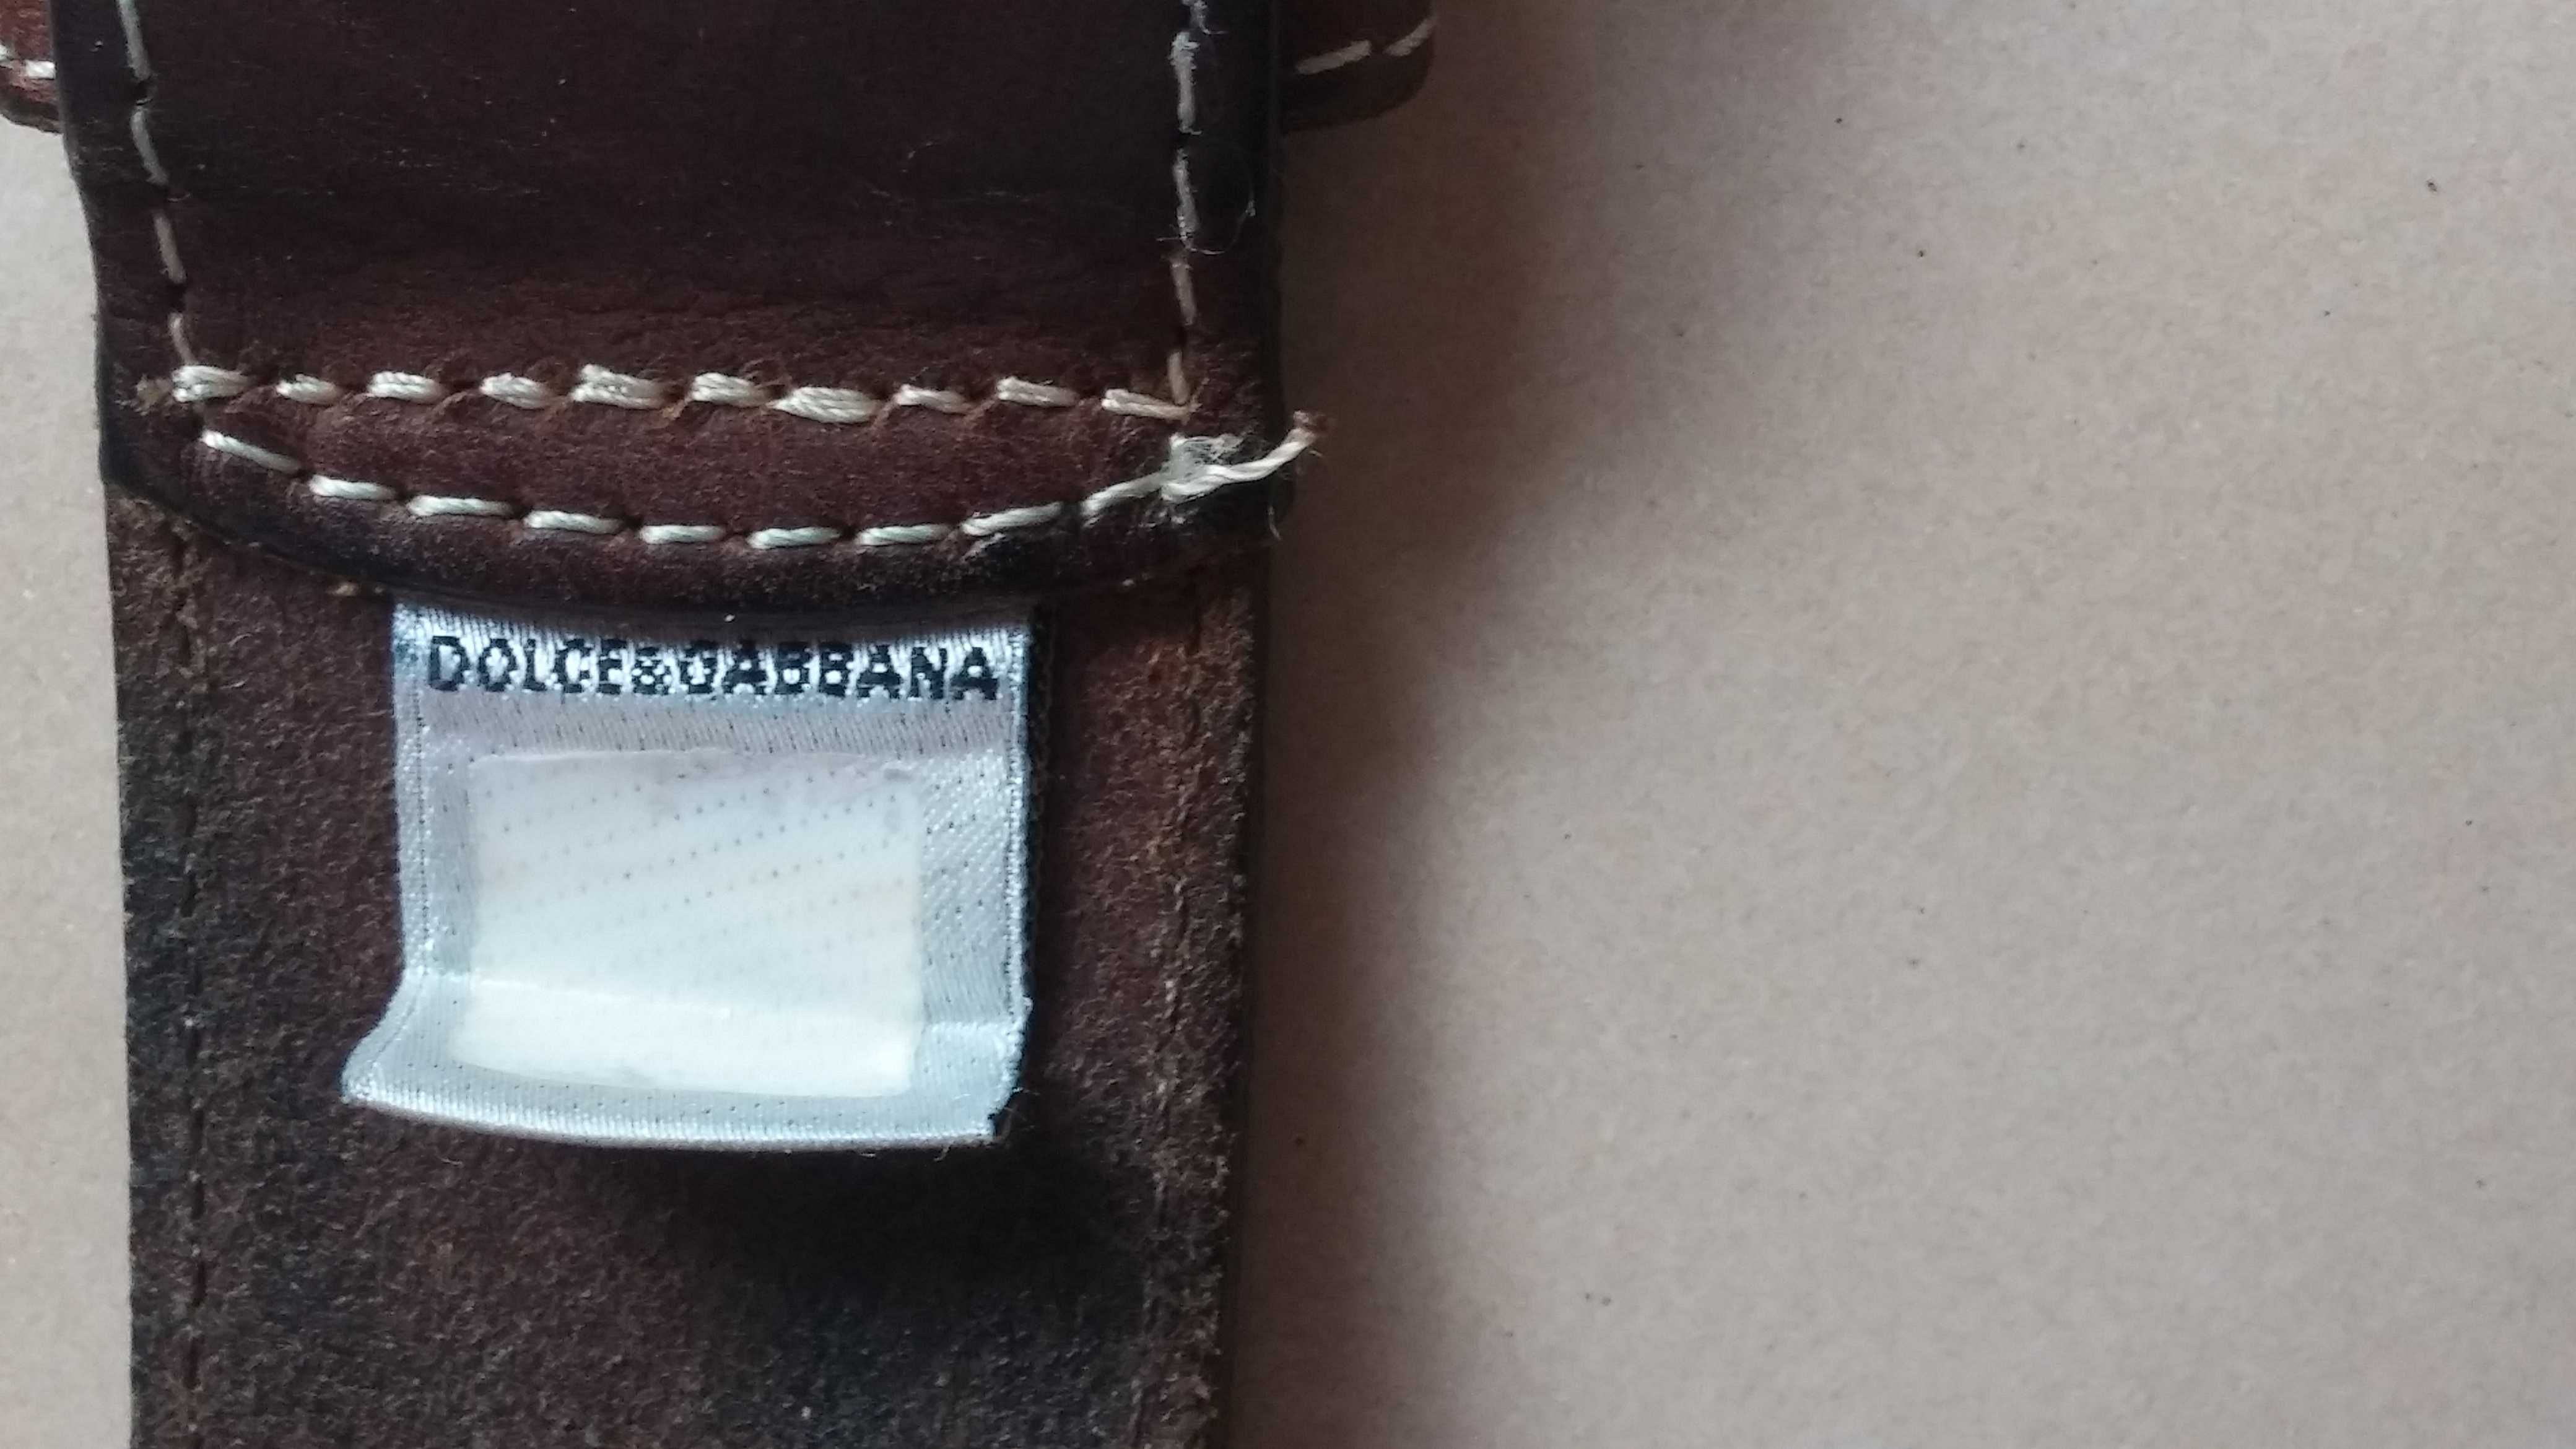 Oryginalny skórzany pasek Dolce Gabbana z hologramem - używany !!